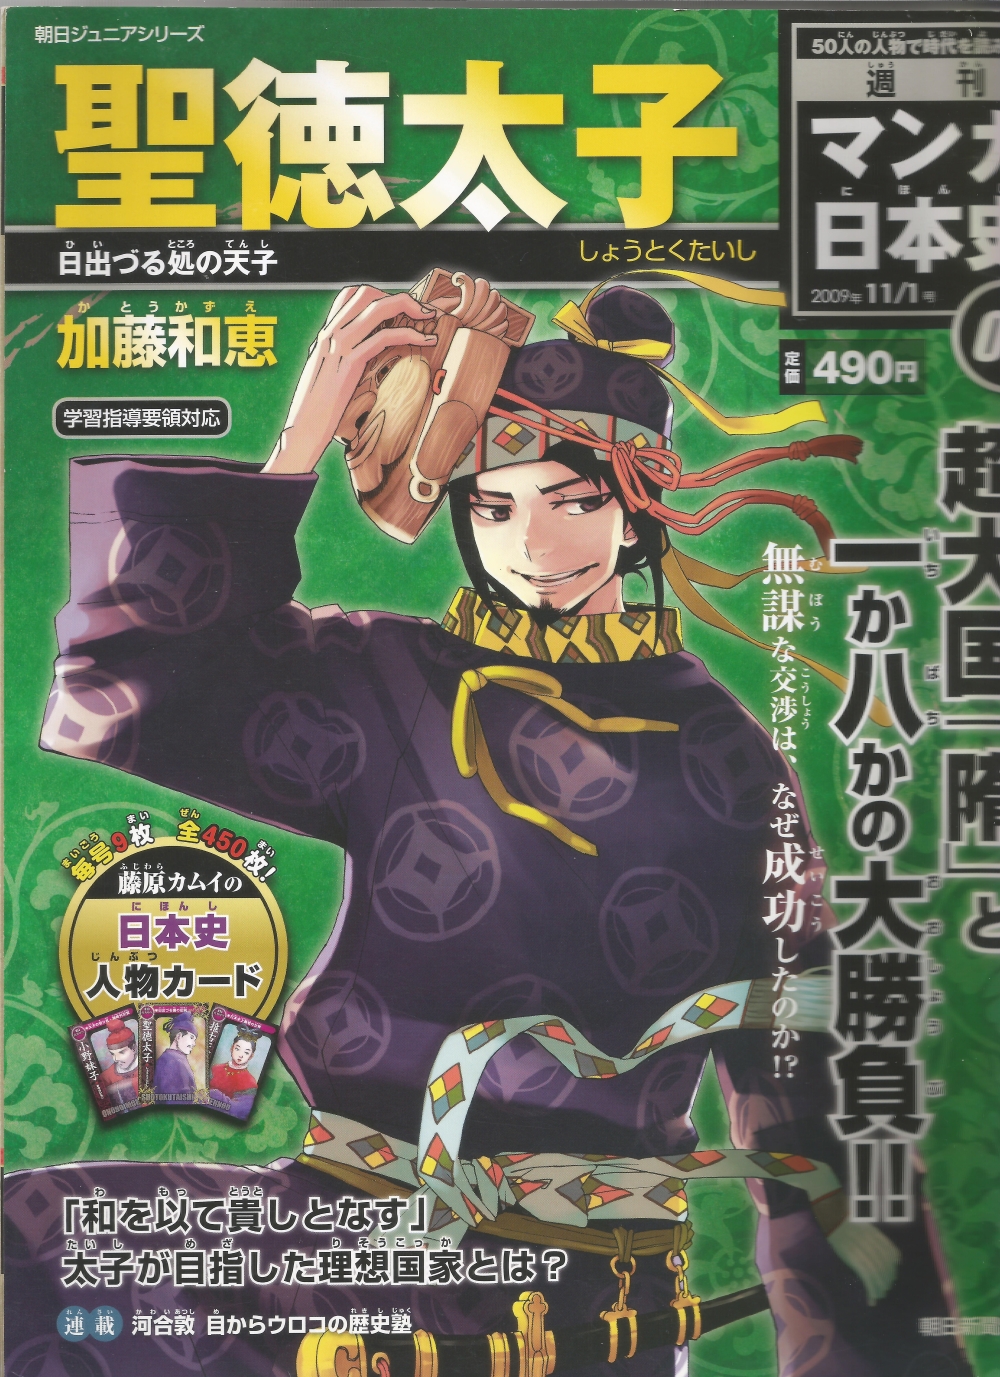 Weekly Manga Japanese History Ch. 2 Prince Shotoku